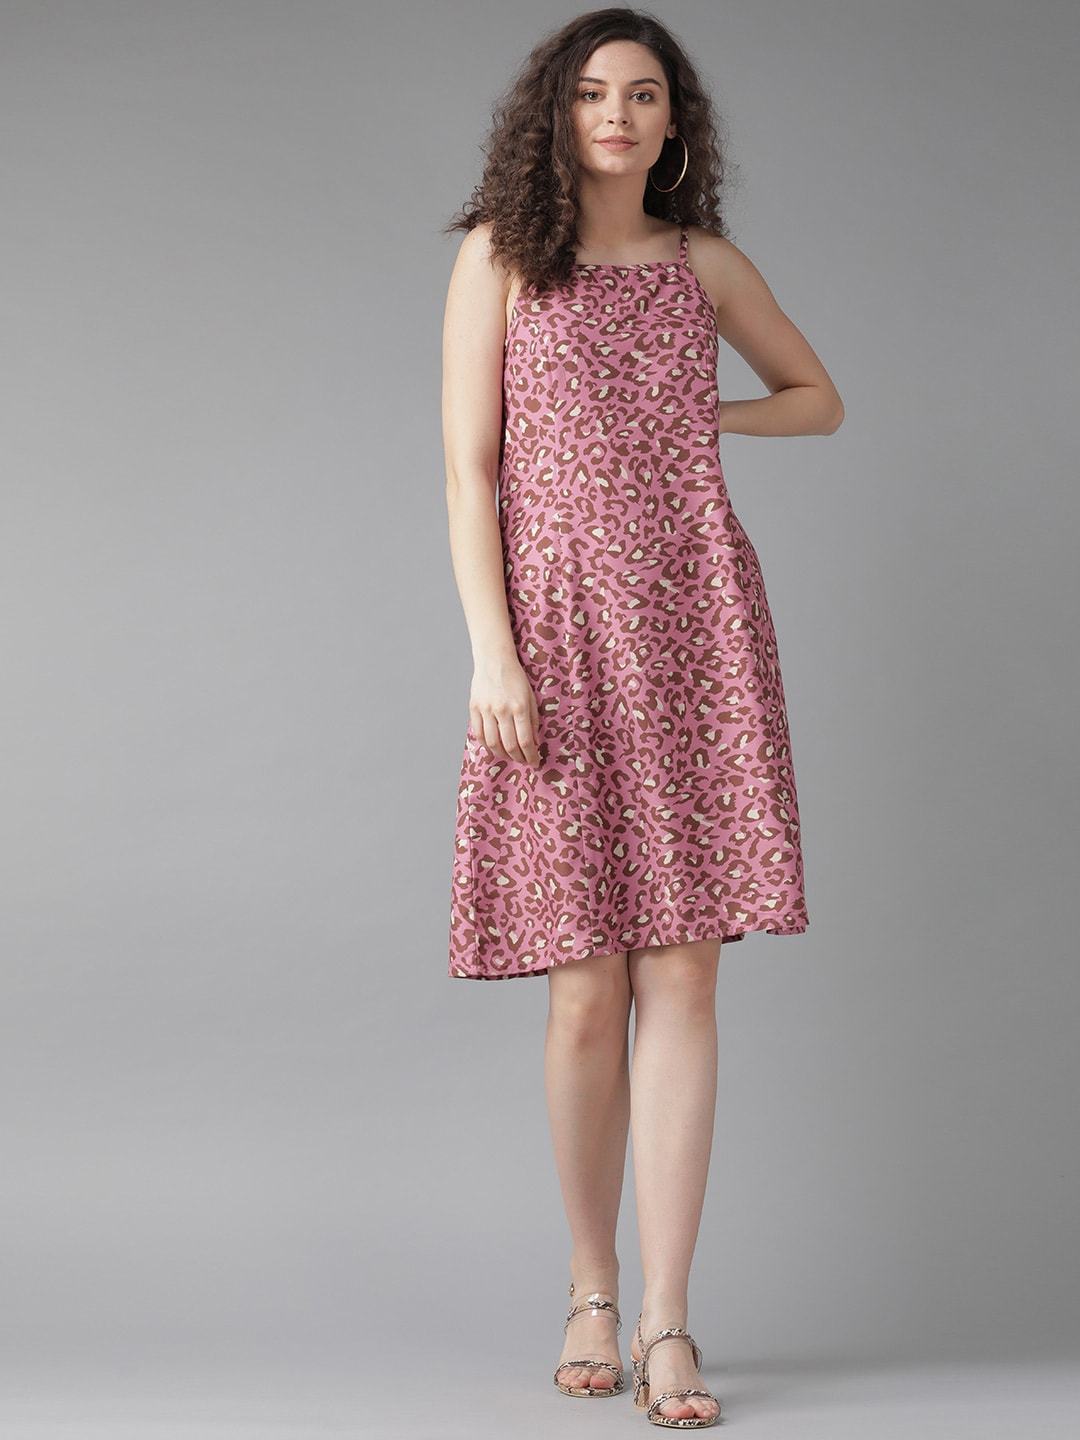 Women's  Pink & Brown Leopard Print A-Line Dress - AKS